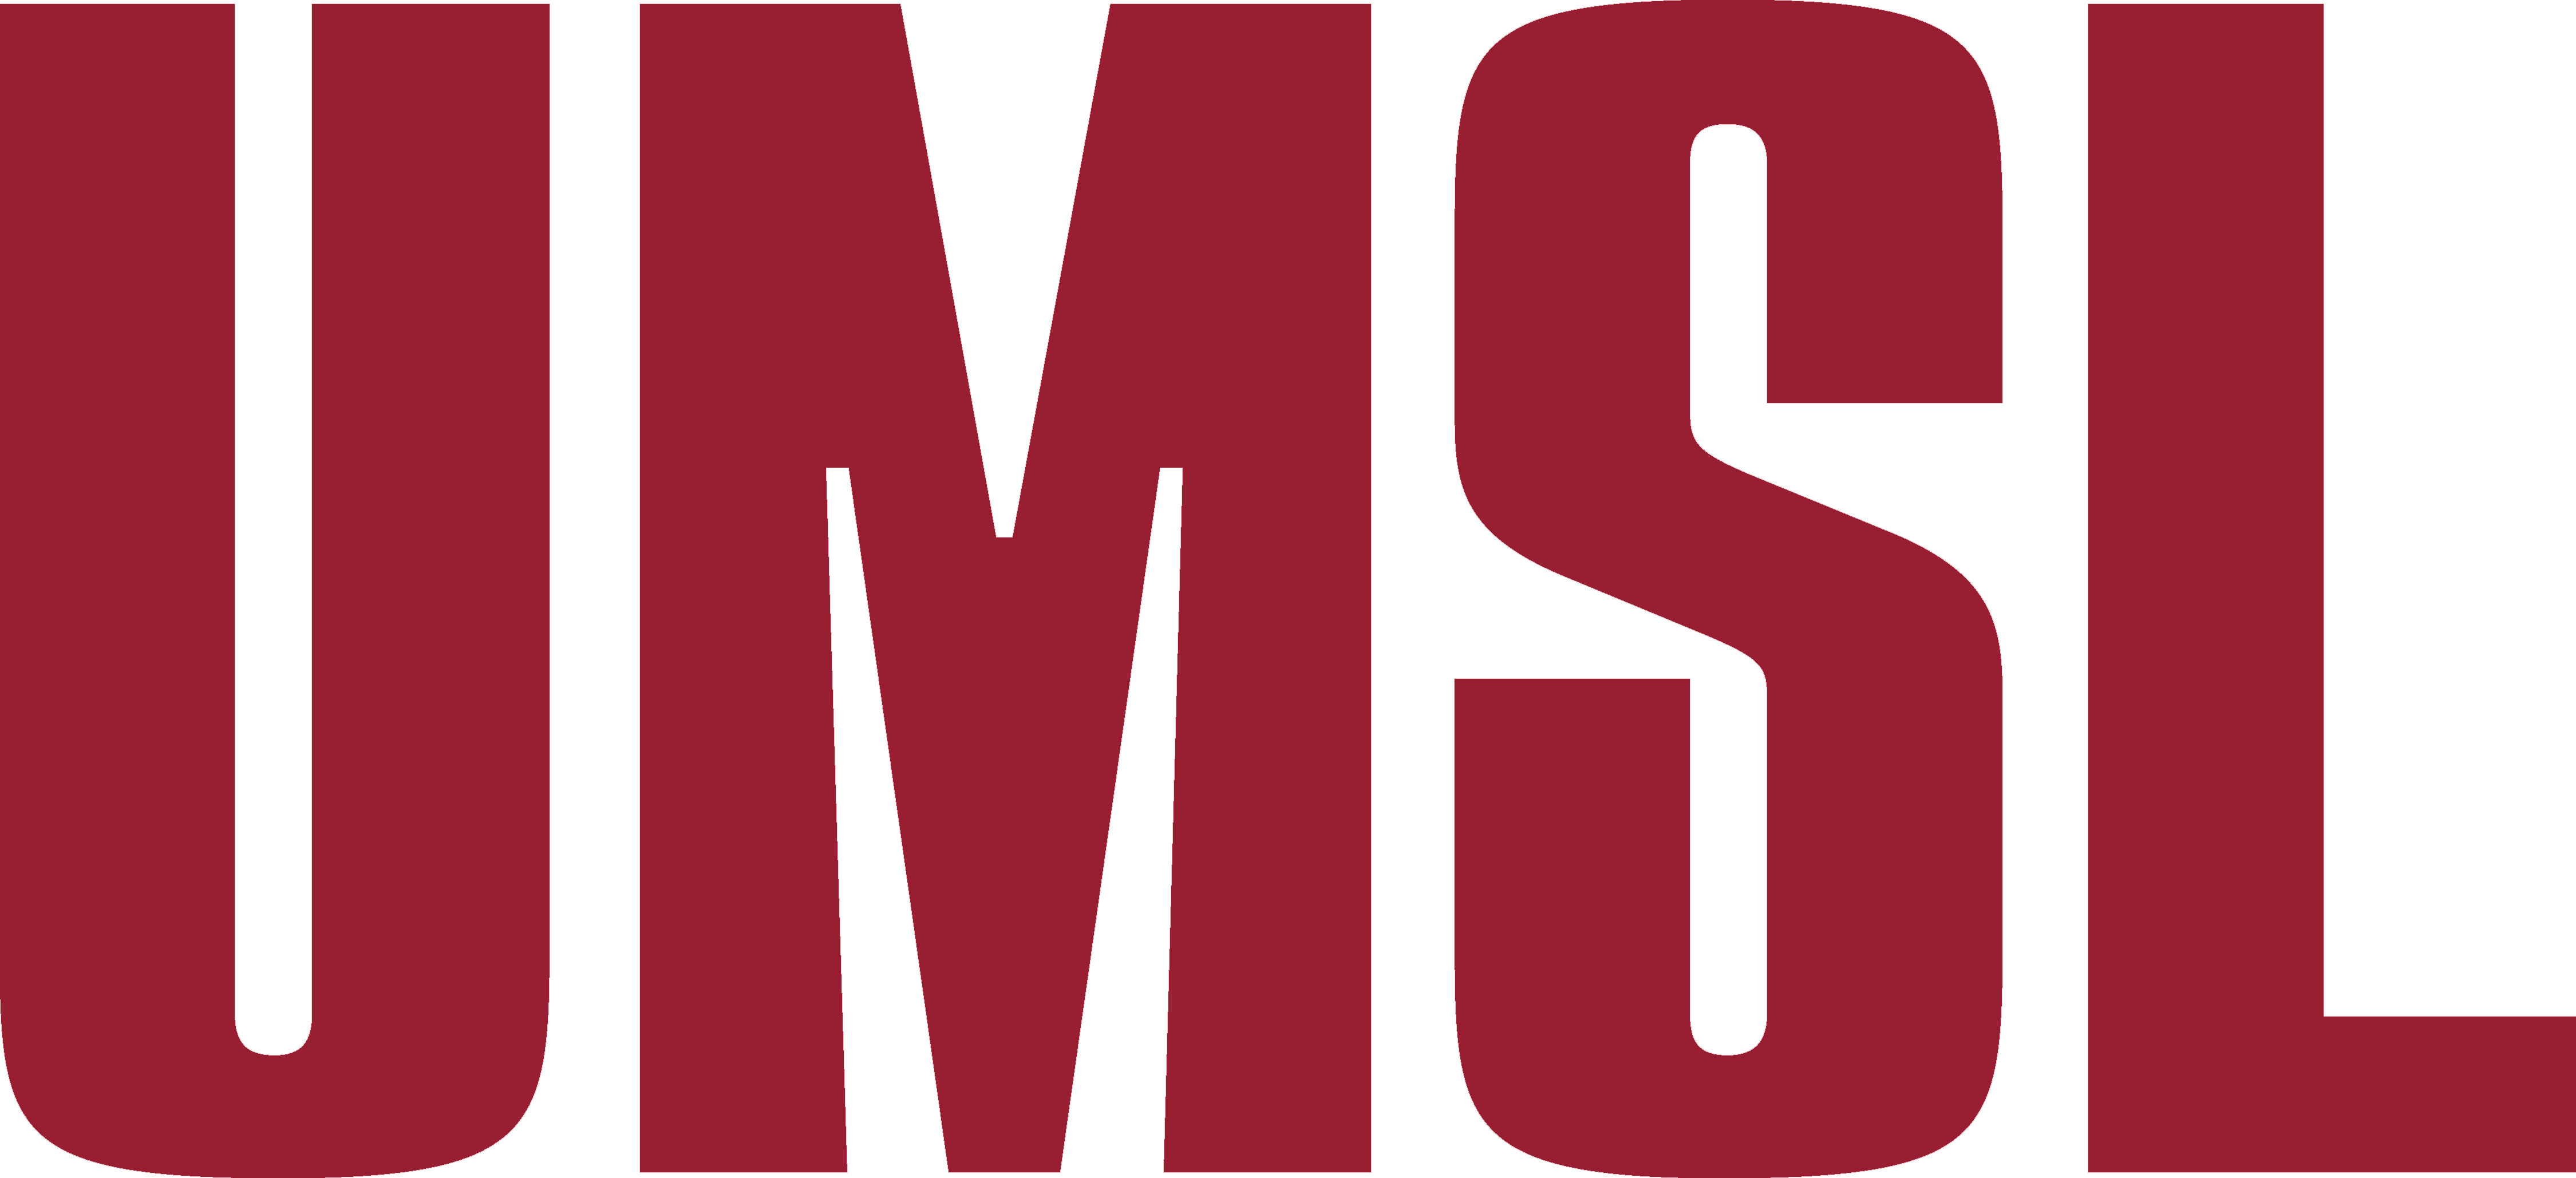 University of Missouri - St Louis logo